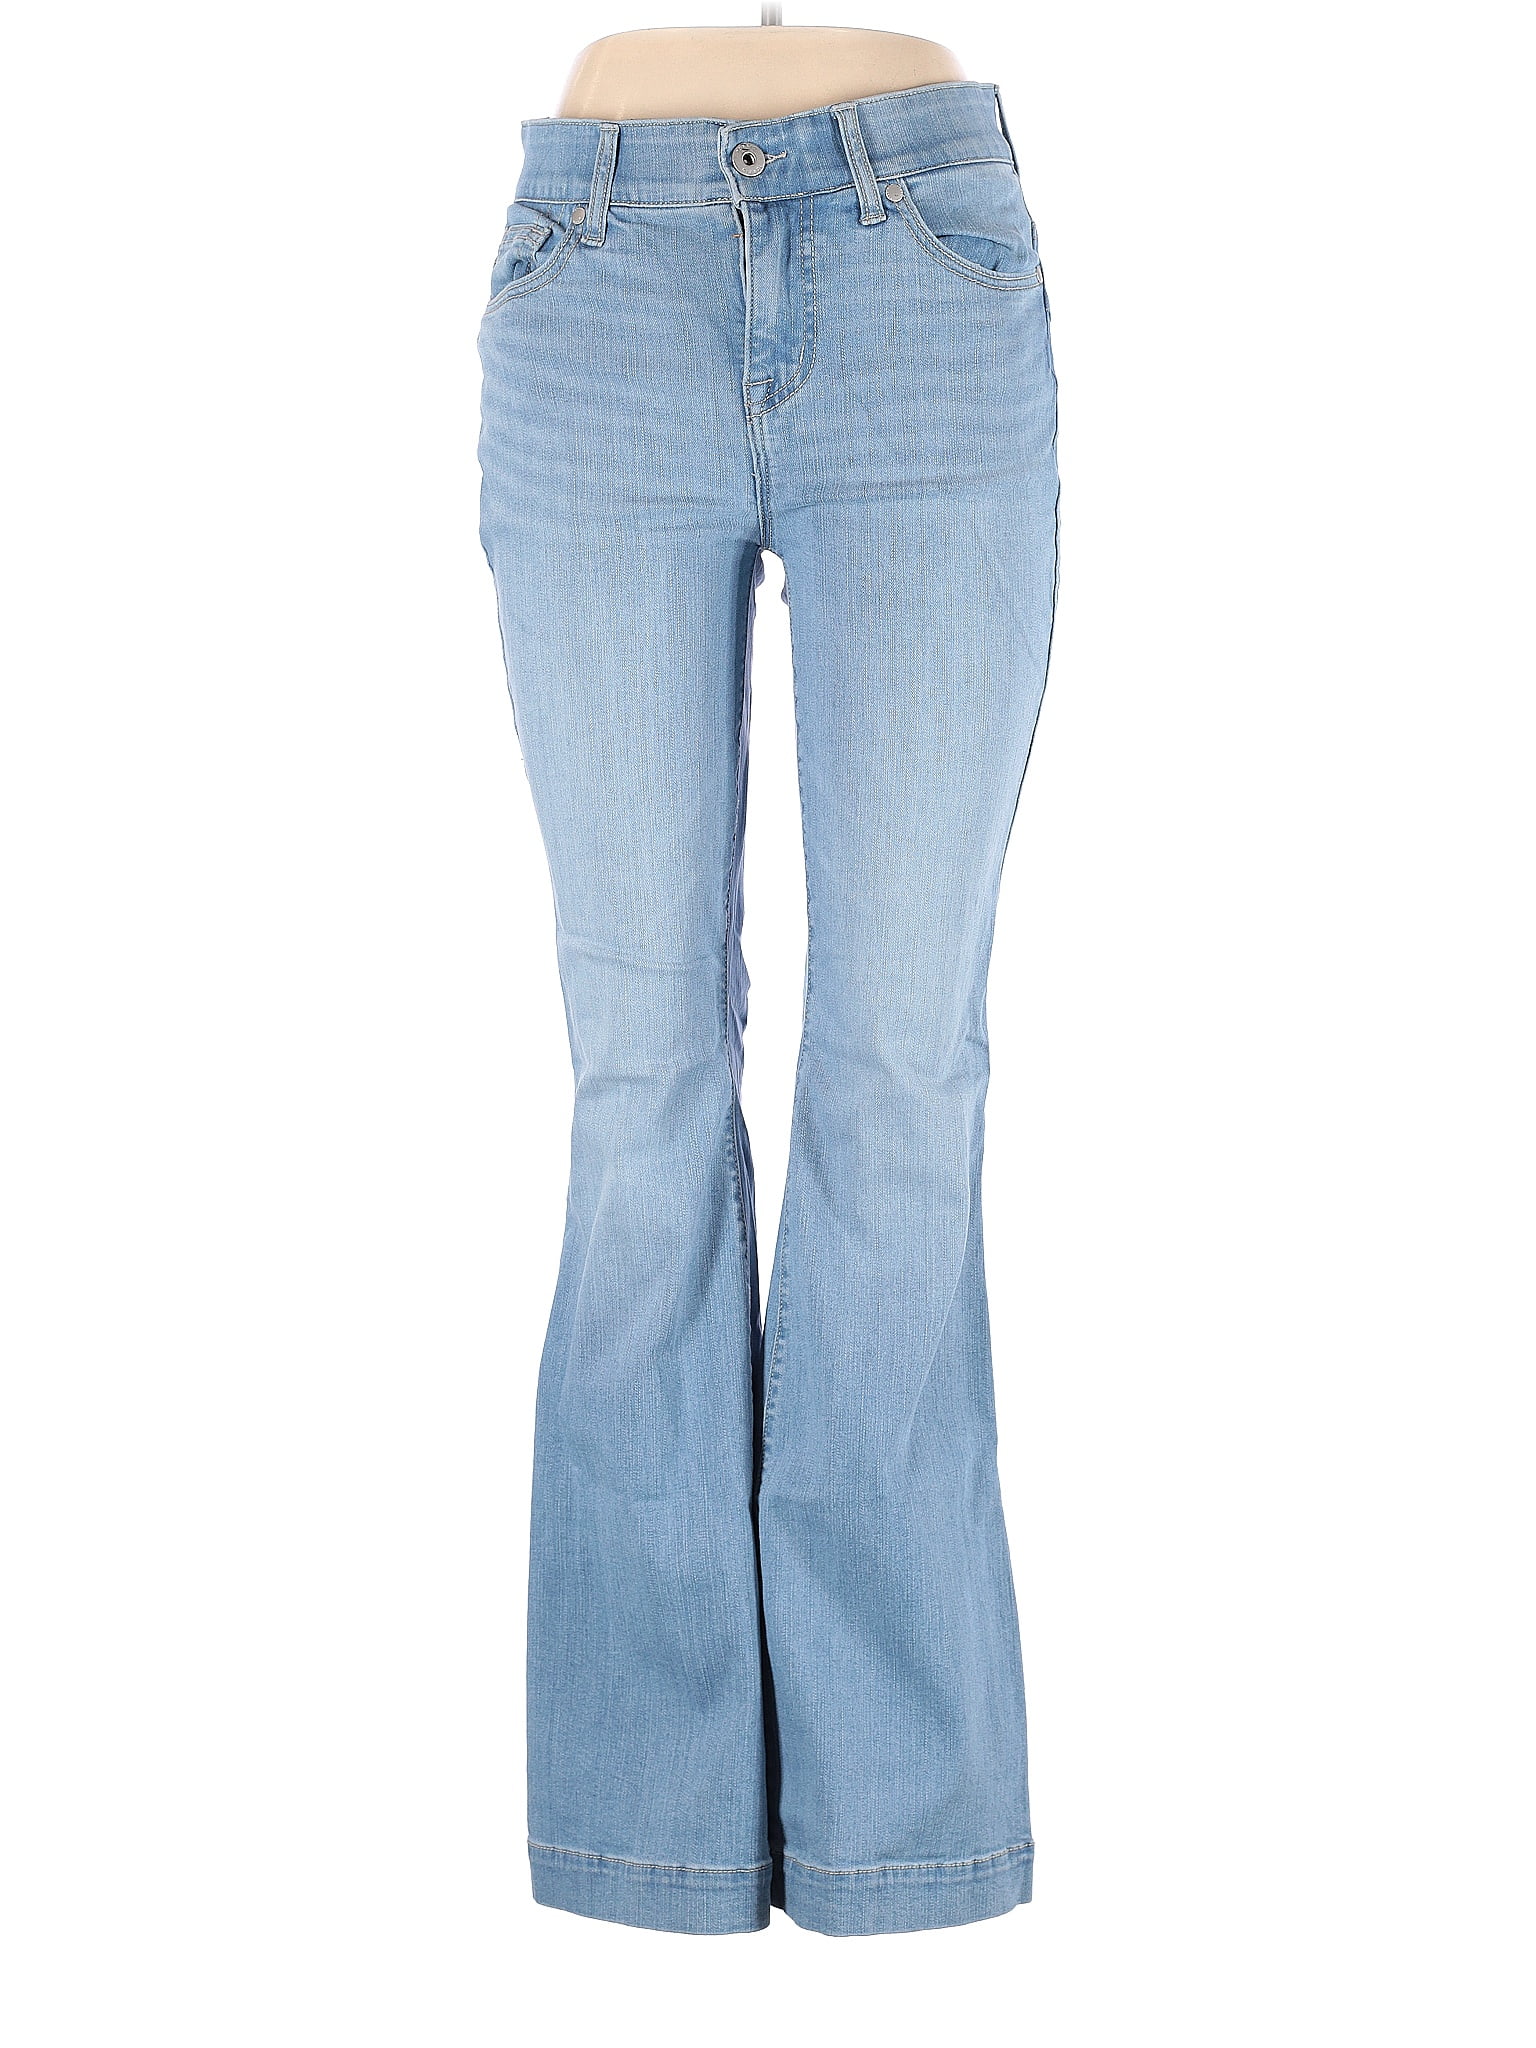 Torrid Solid Blue Jeans Size 10 (Plus) - 59% off | thredUP